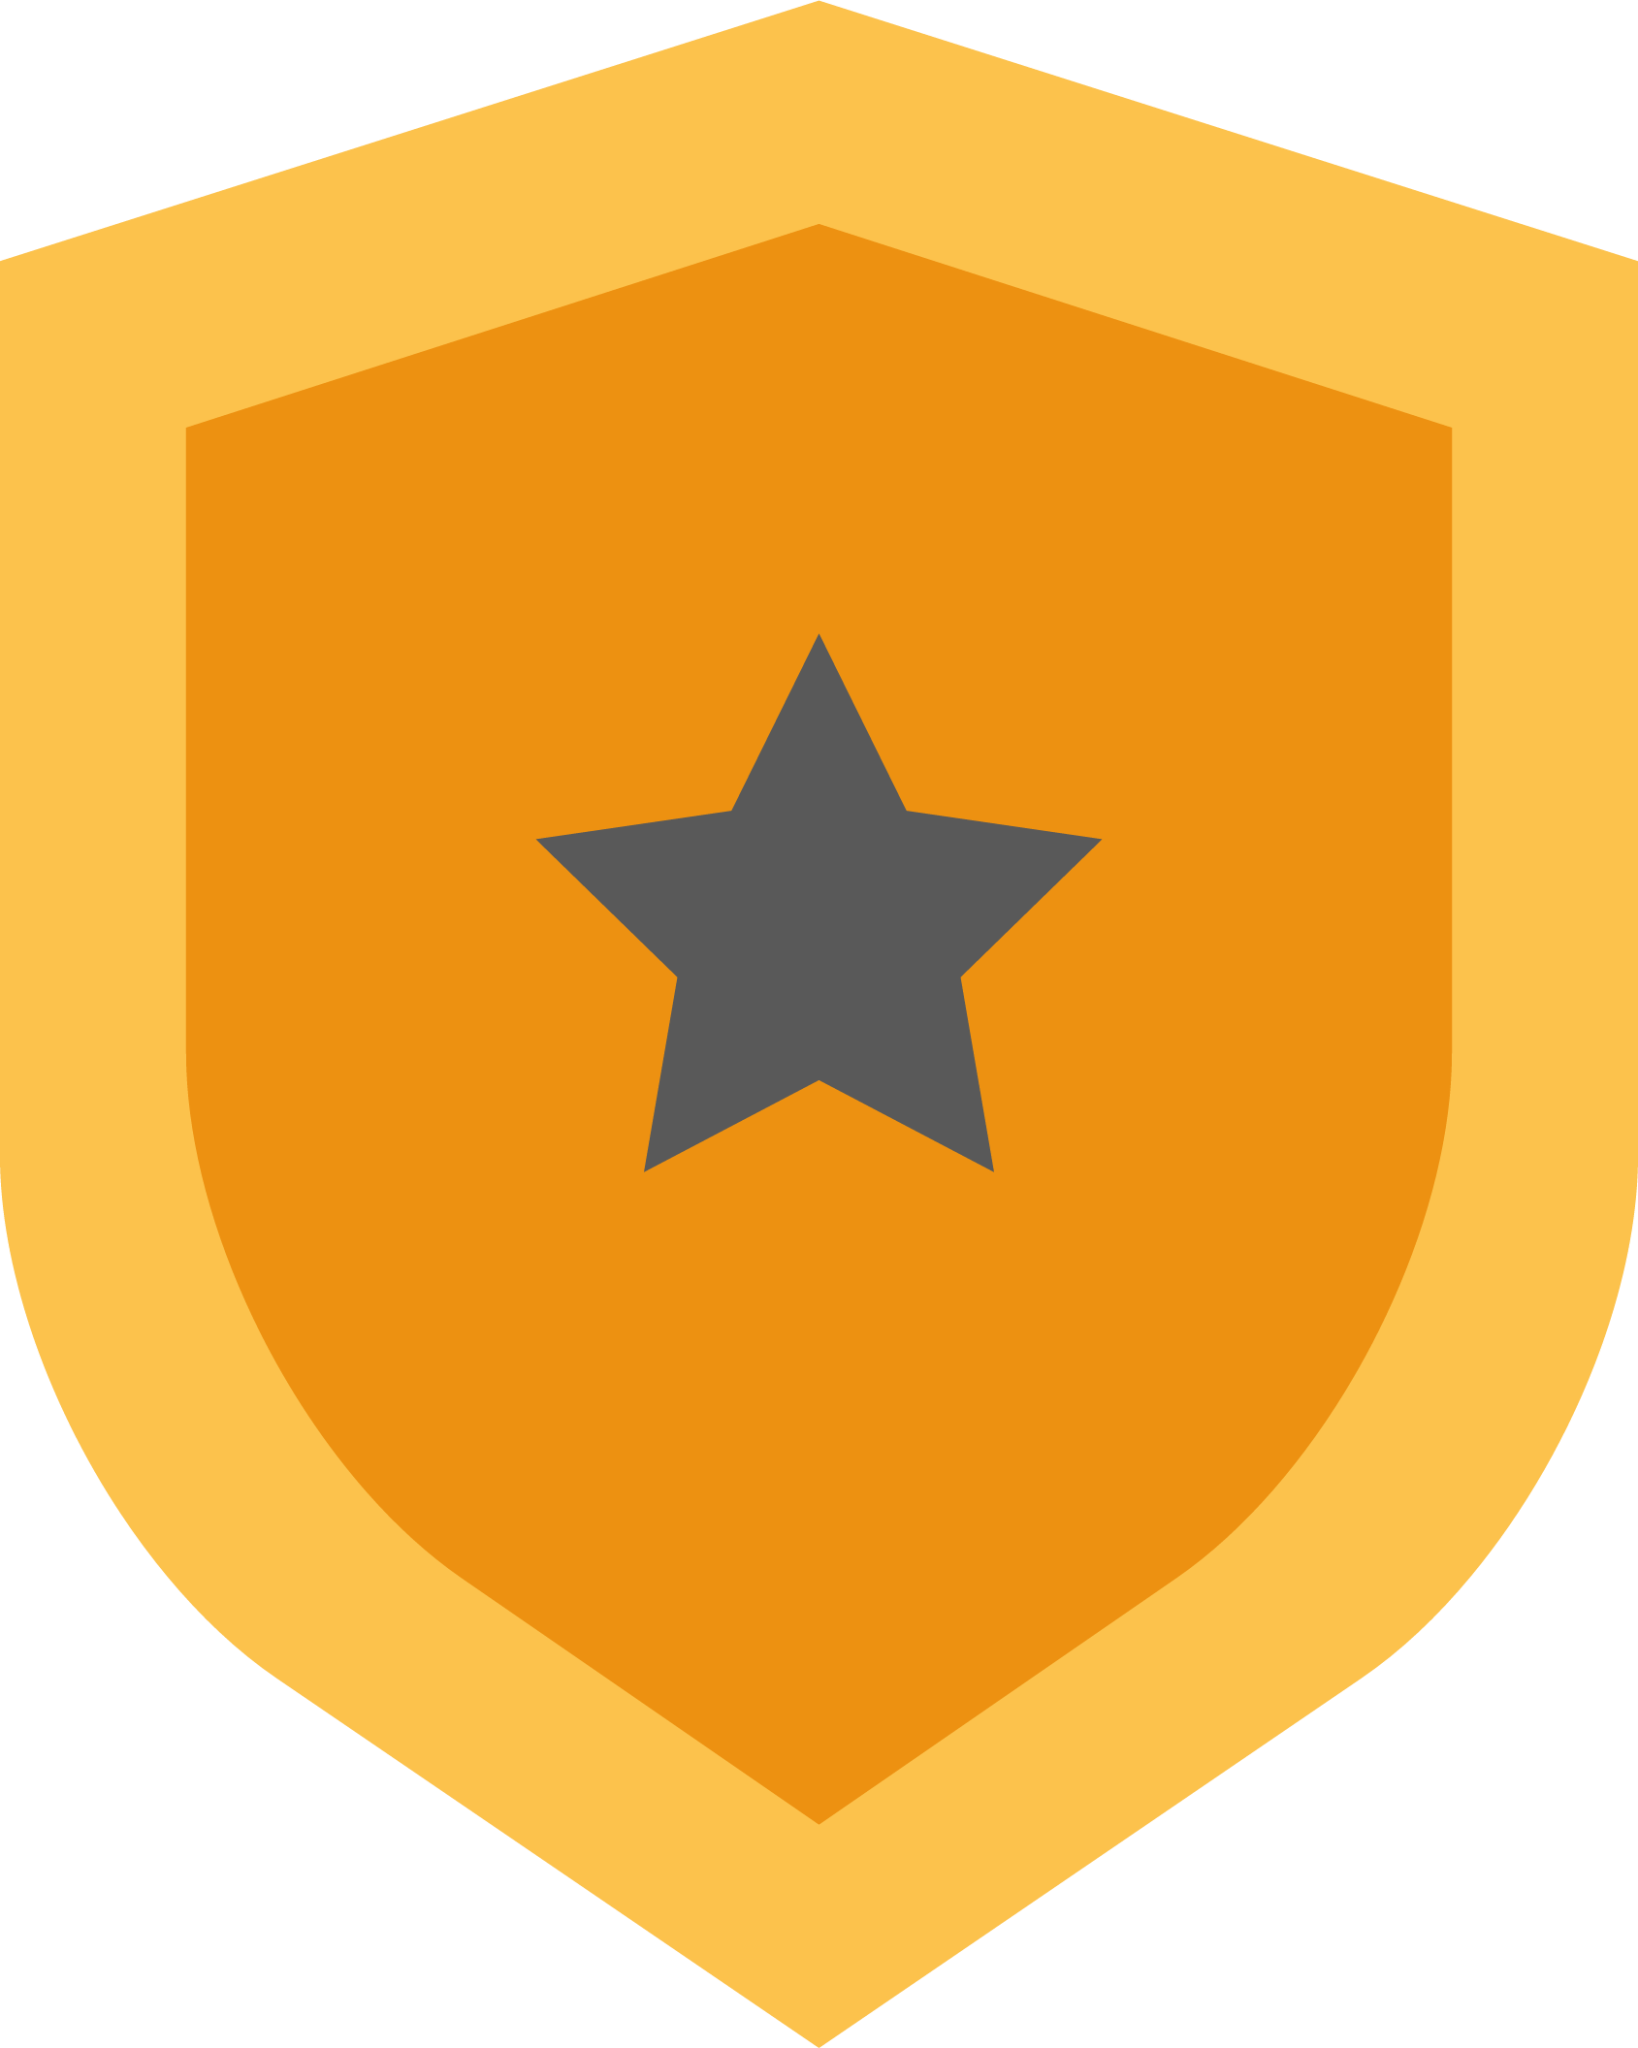 shield star icon